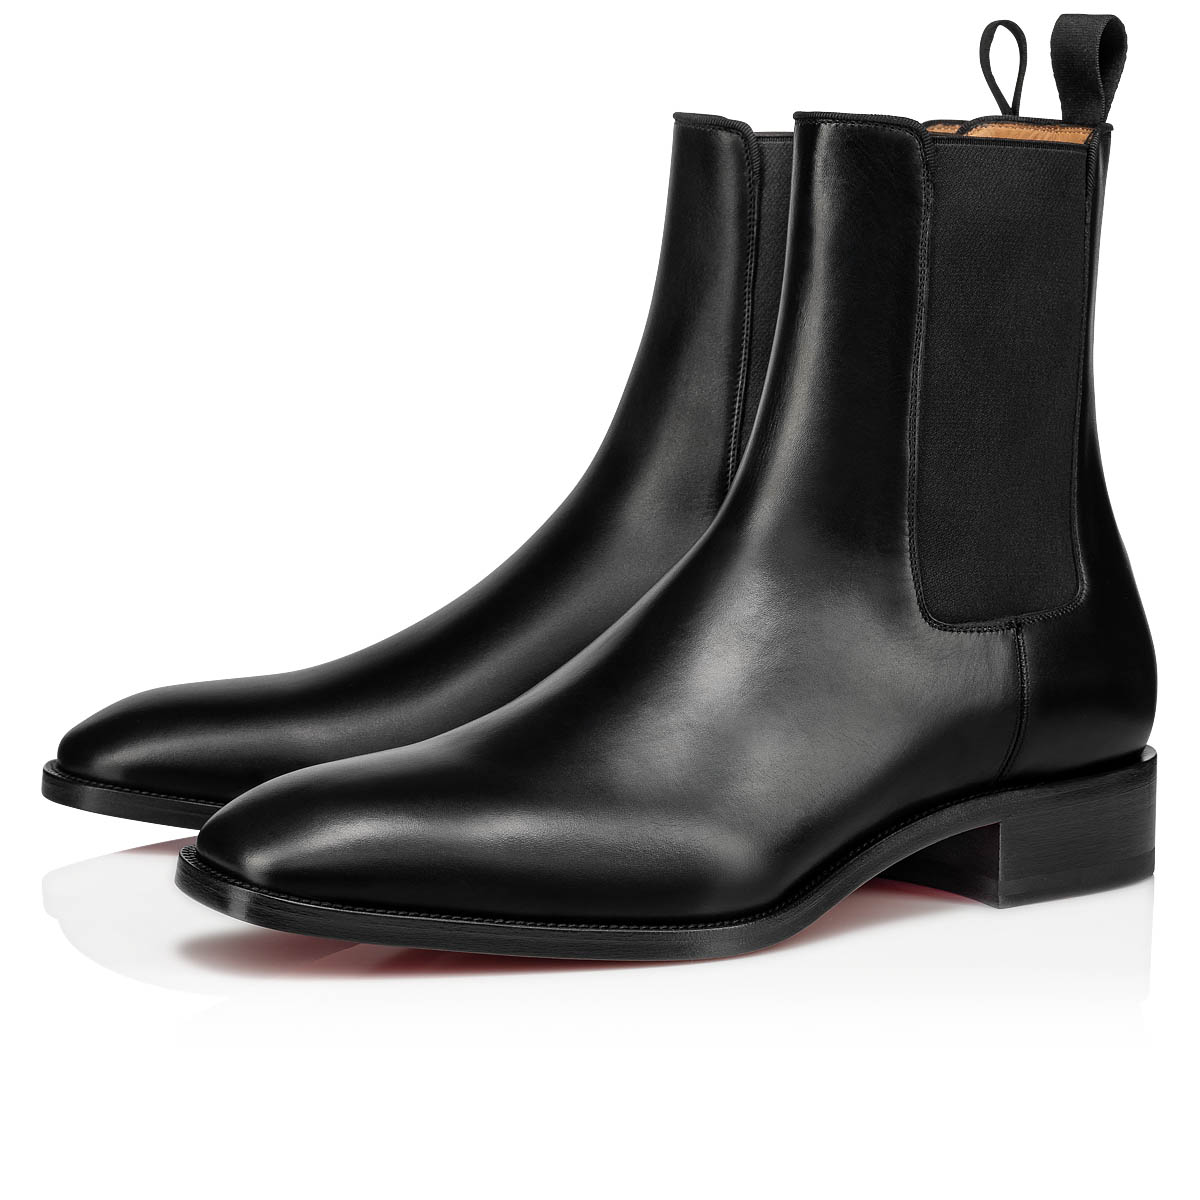 SAMSON 000 BLACK Calf - Shoes - Men - Christian Louboutin